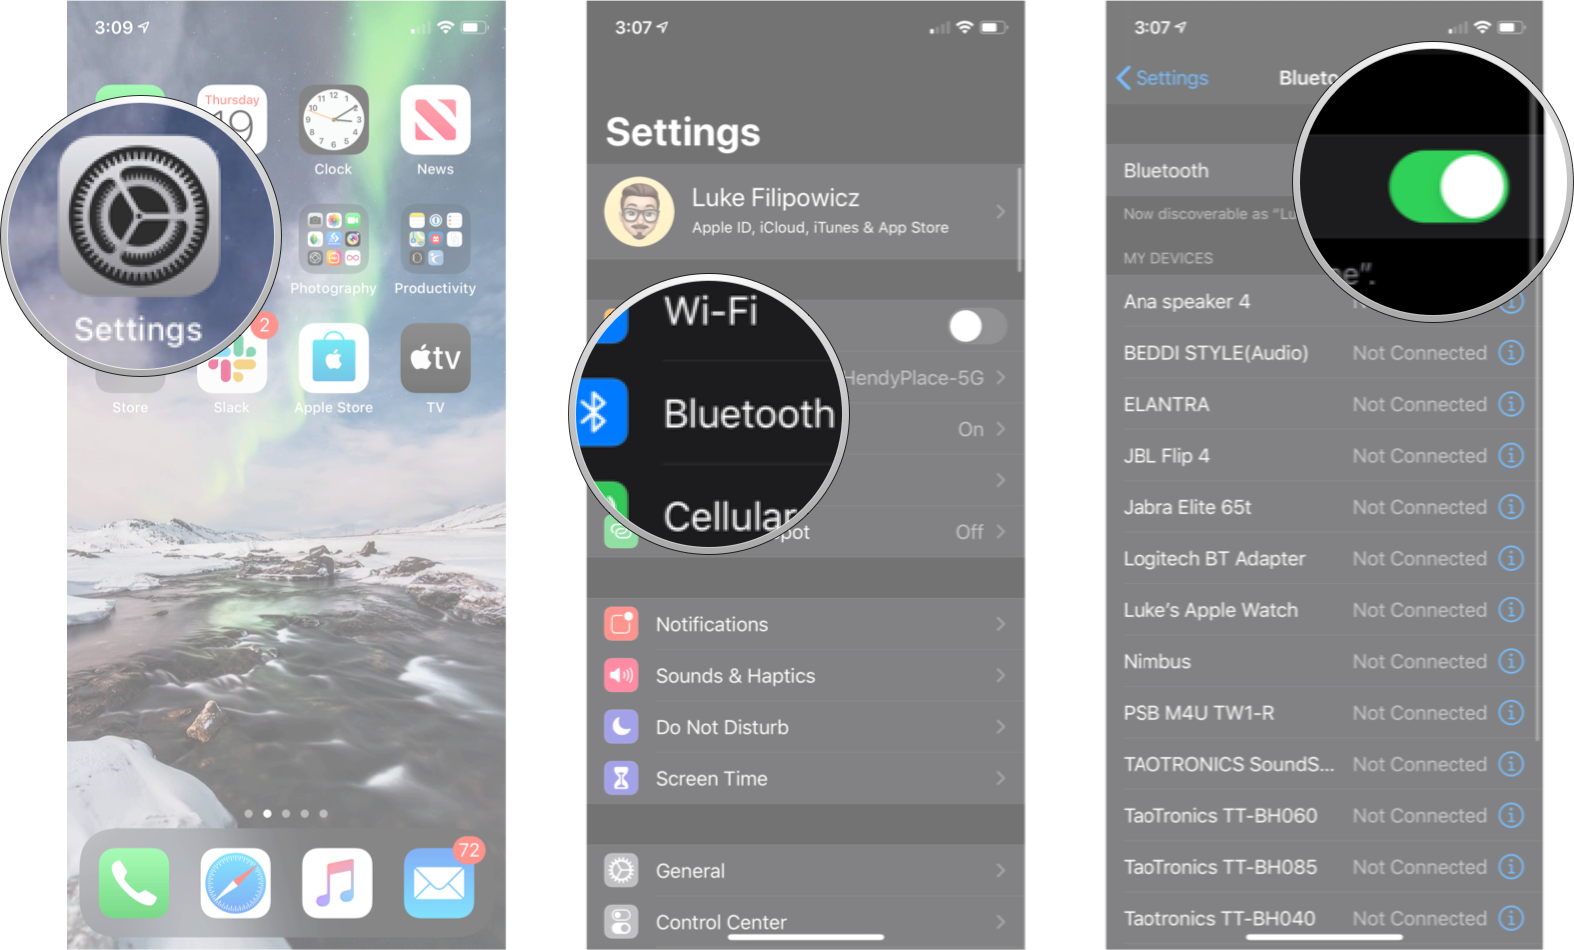 Turn on Bluetooth on iPhone: Launch Settings, tap Bluetooth, and then tap the Bluetooth on/off switch twice.